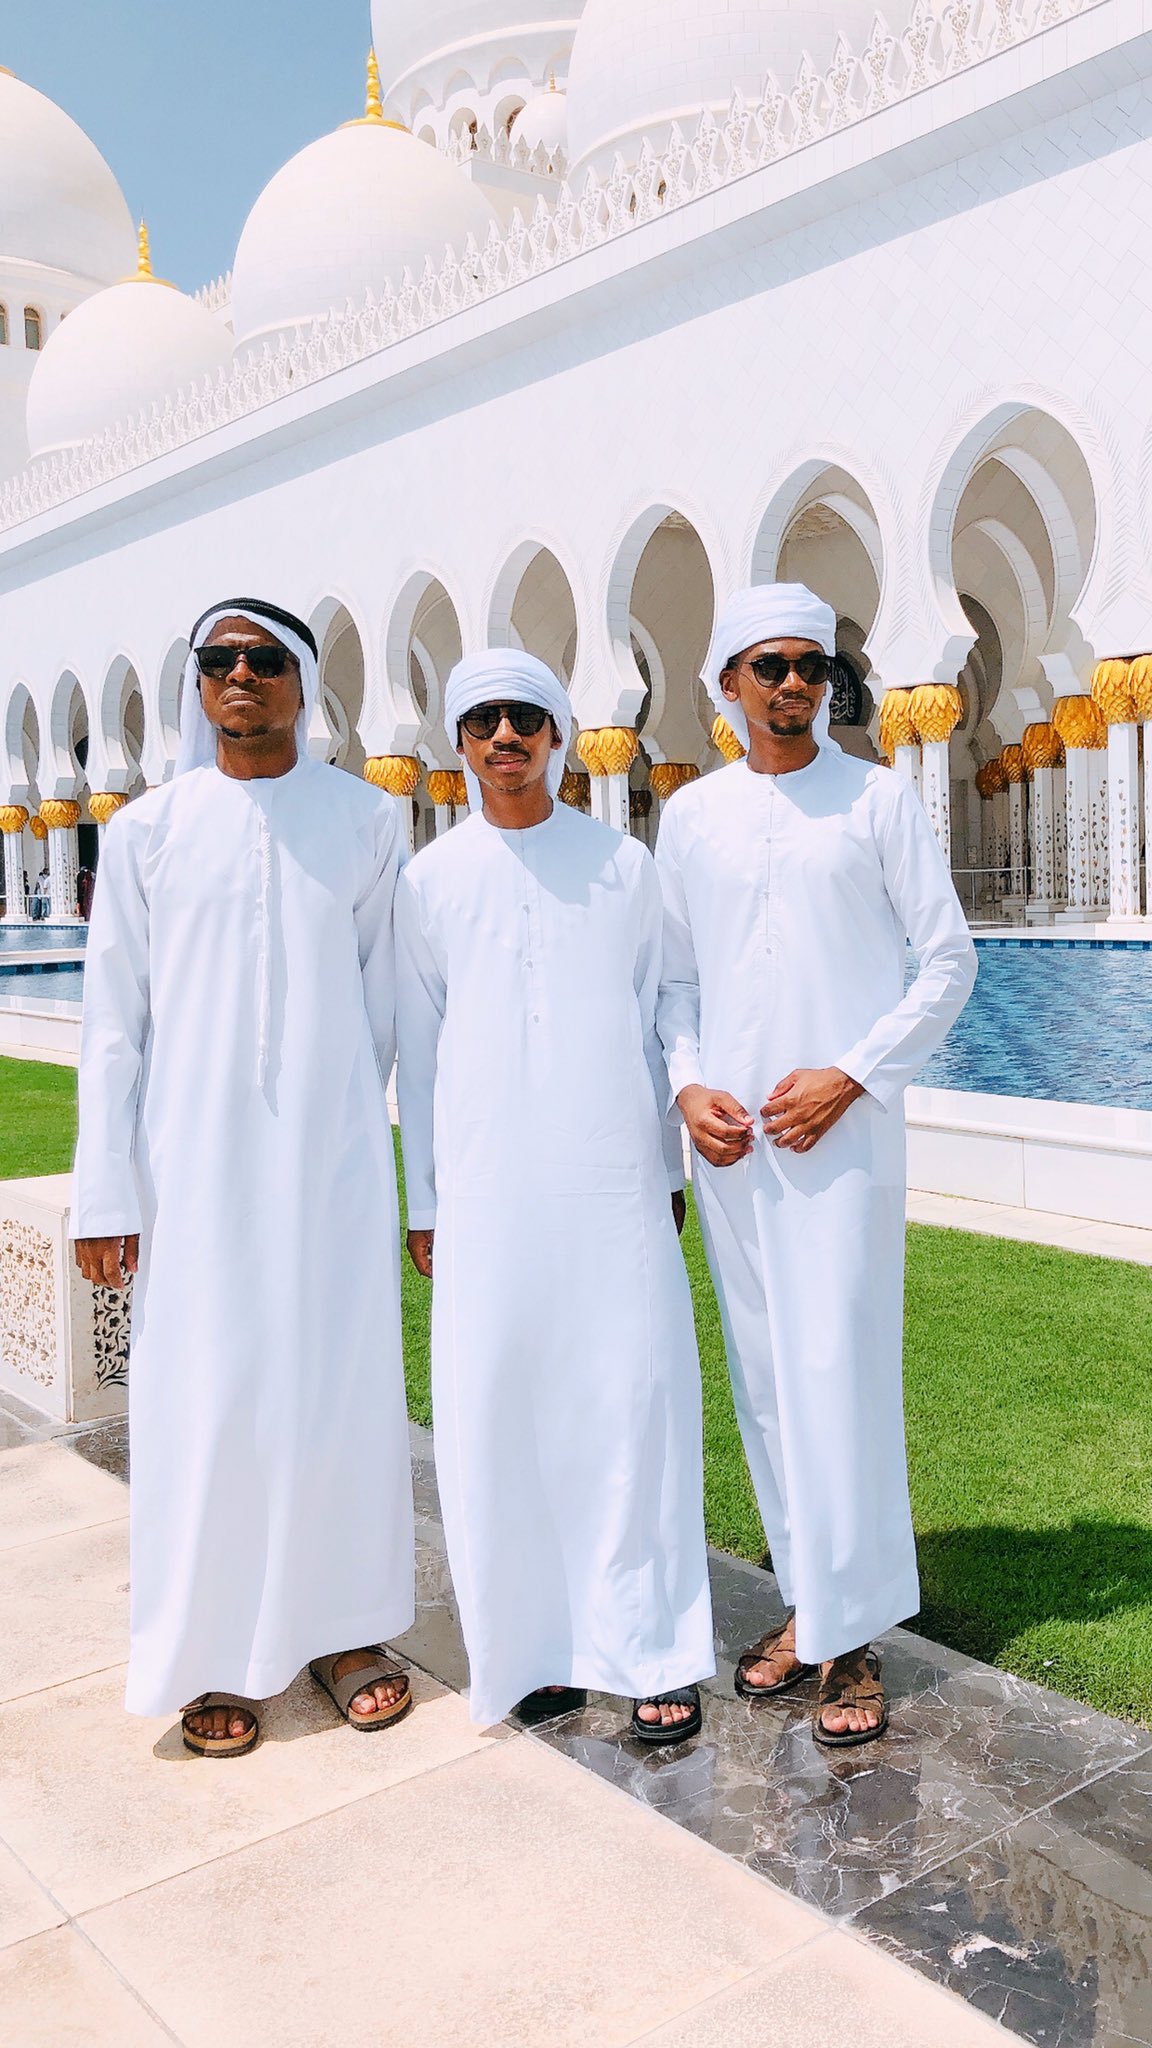 Enforce dress code in Dubai, chorus Netizens - News | Khaleej Times